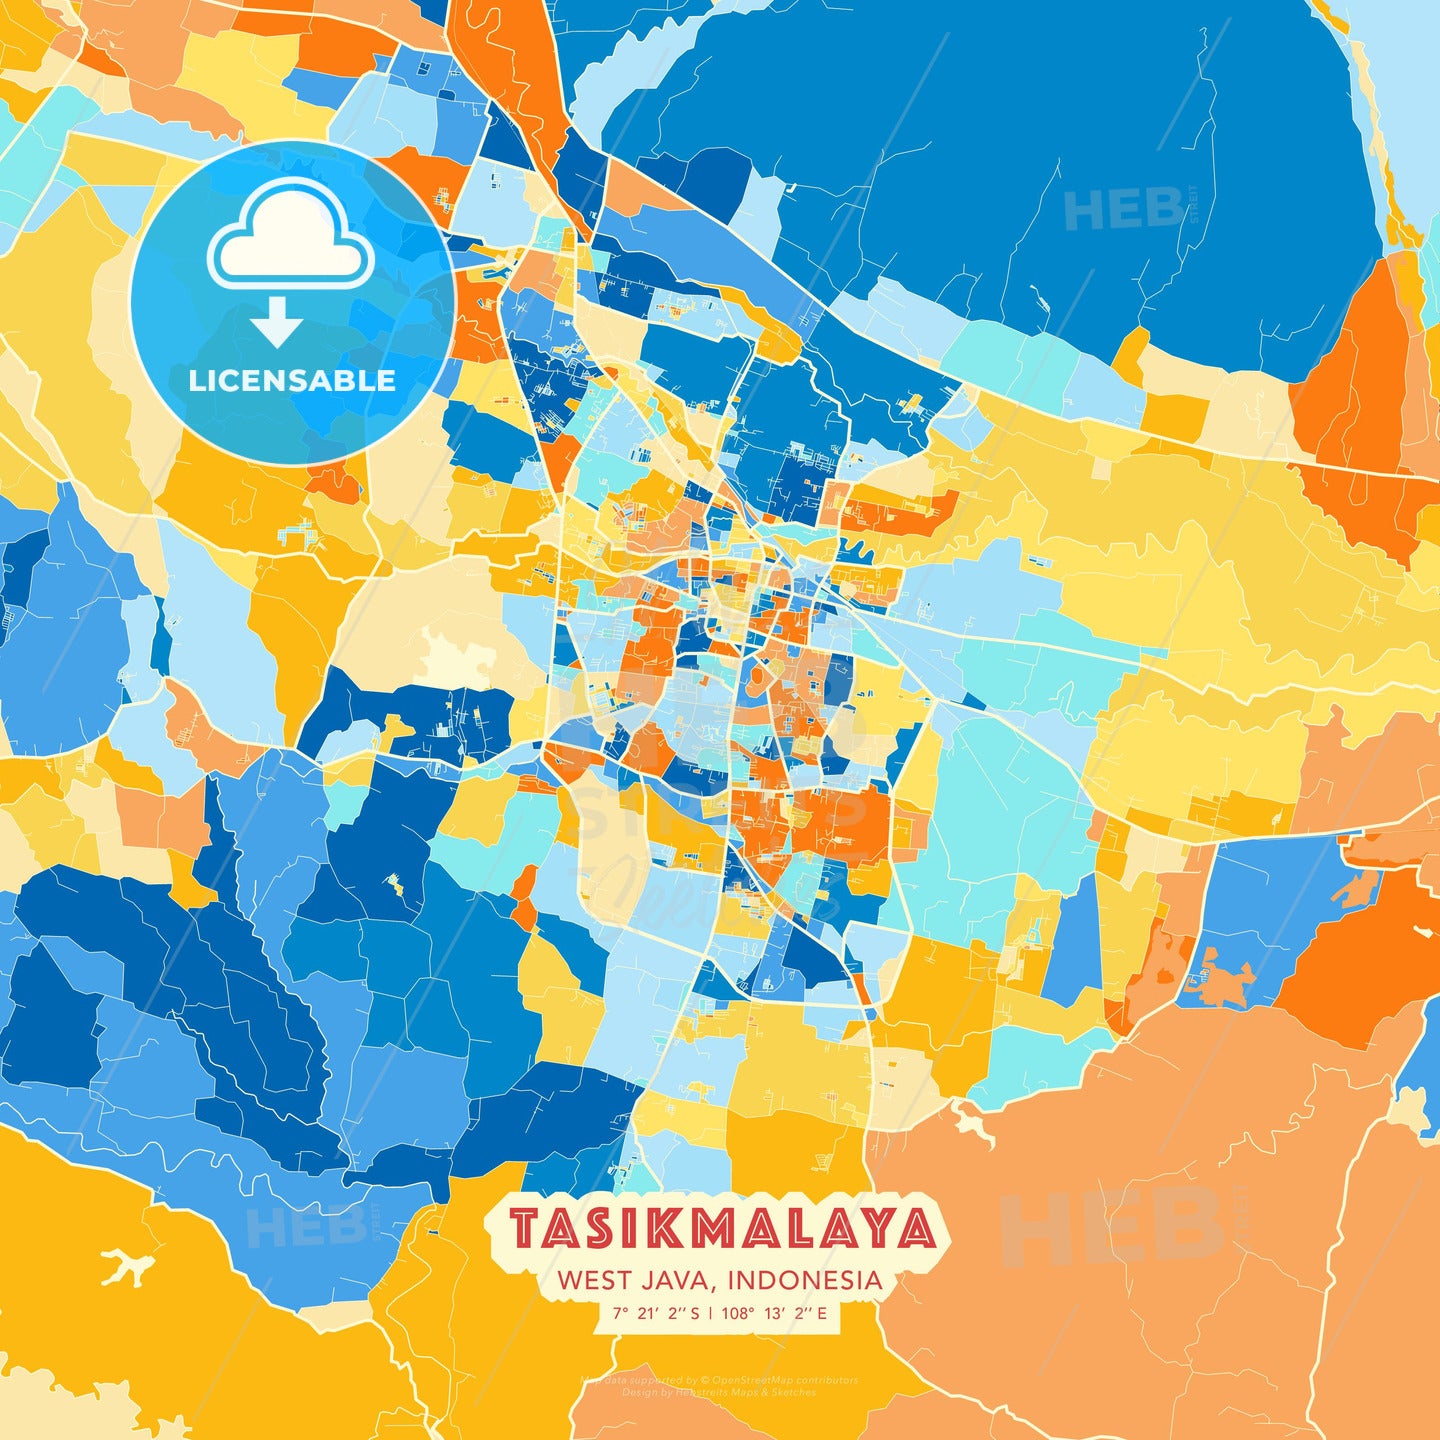 Tasikmalaya, West Java, Indonesia, map - HEBSTREITS Sketches